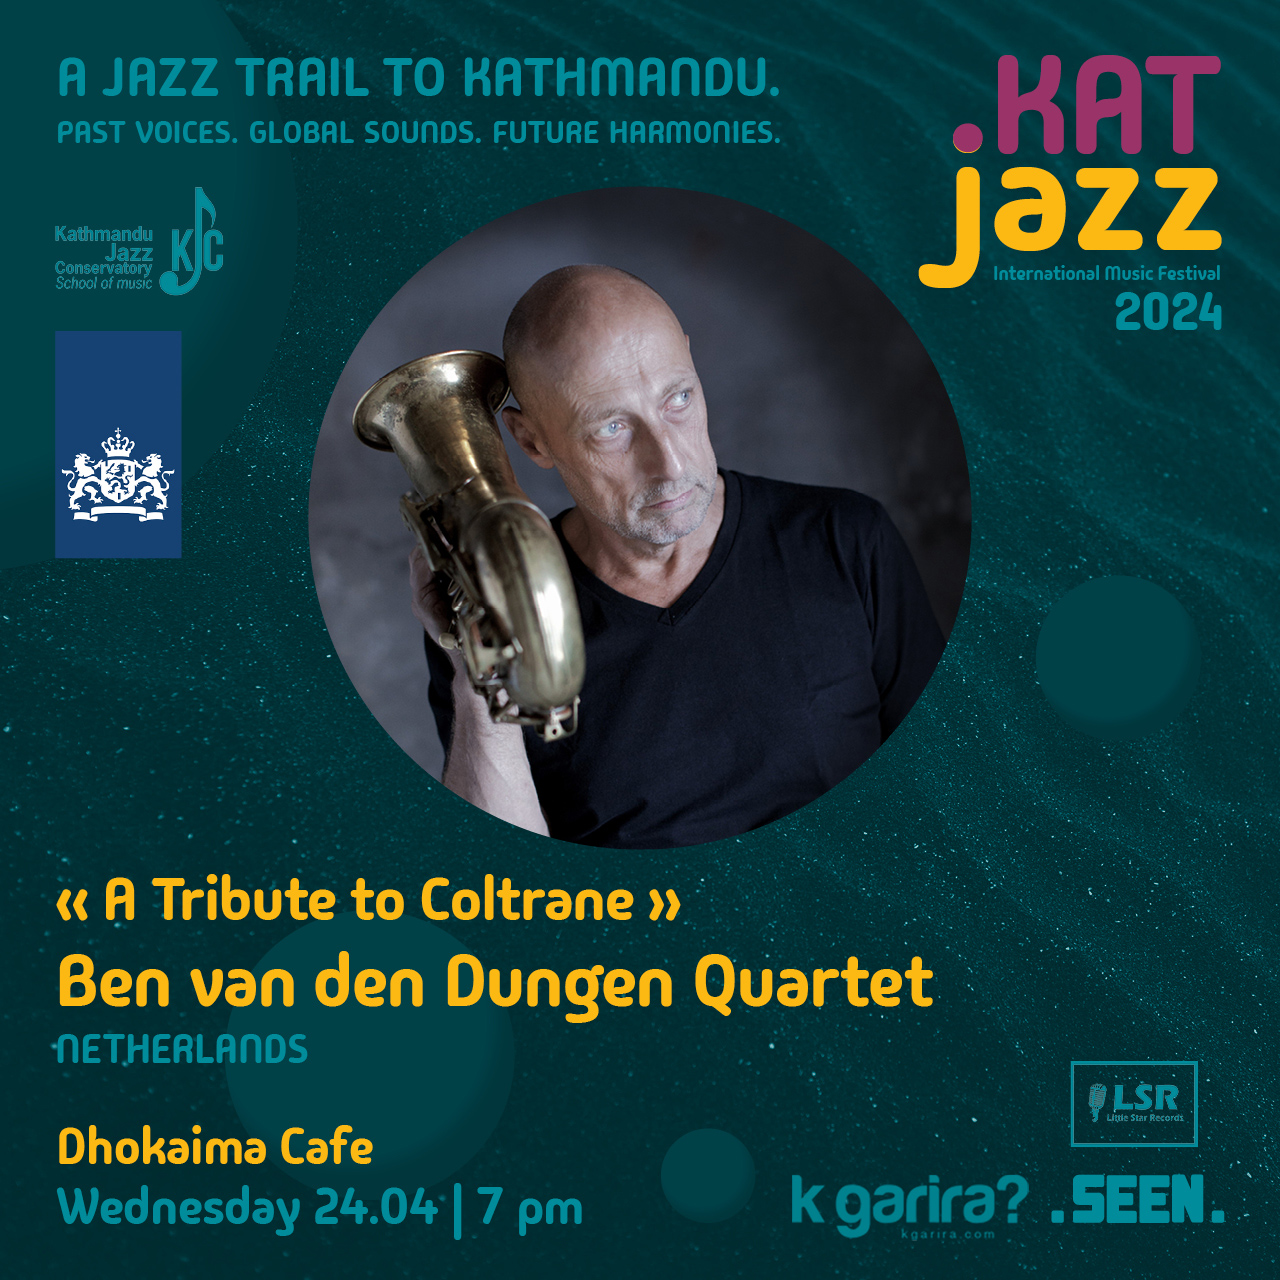 Kat Jazz - A Tribute to Coltrane by Ben van den Dungen Quartet